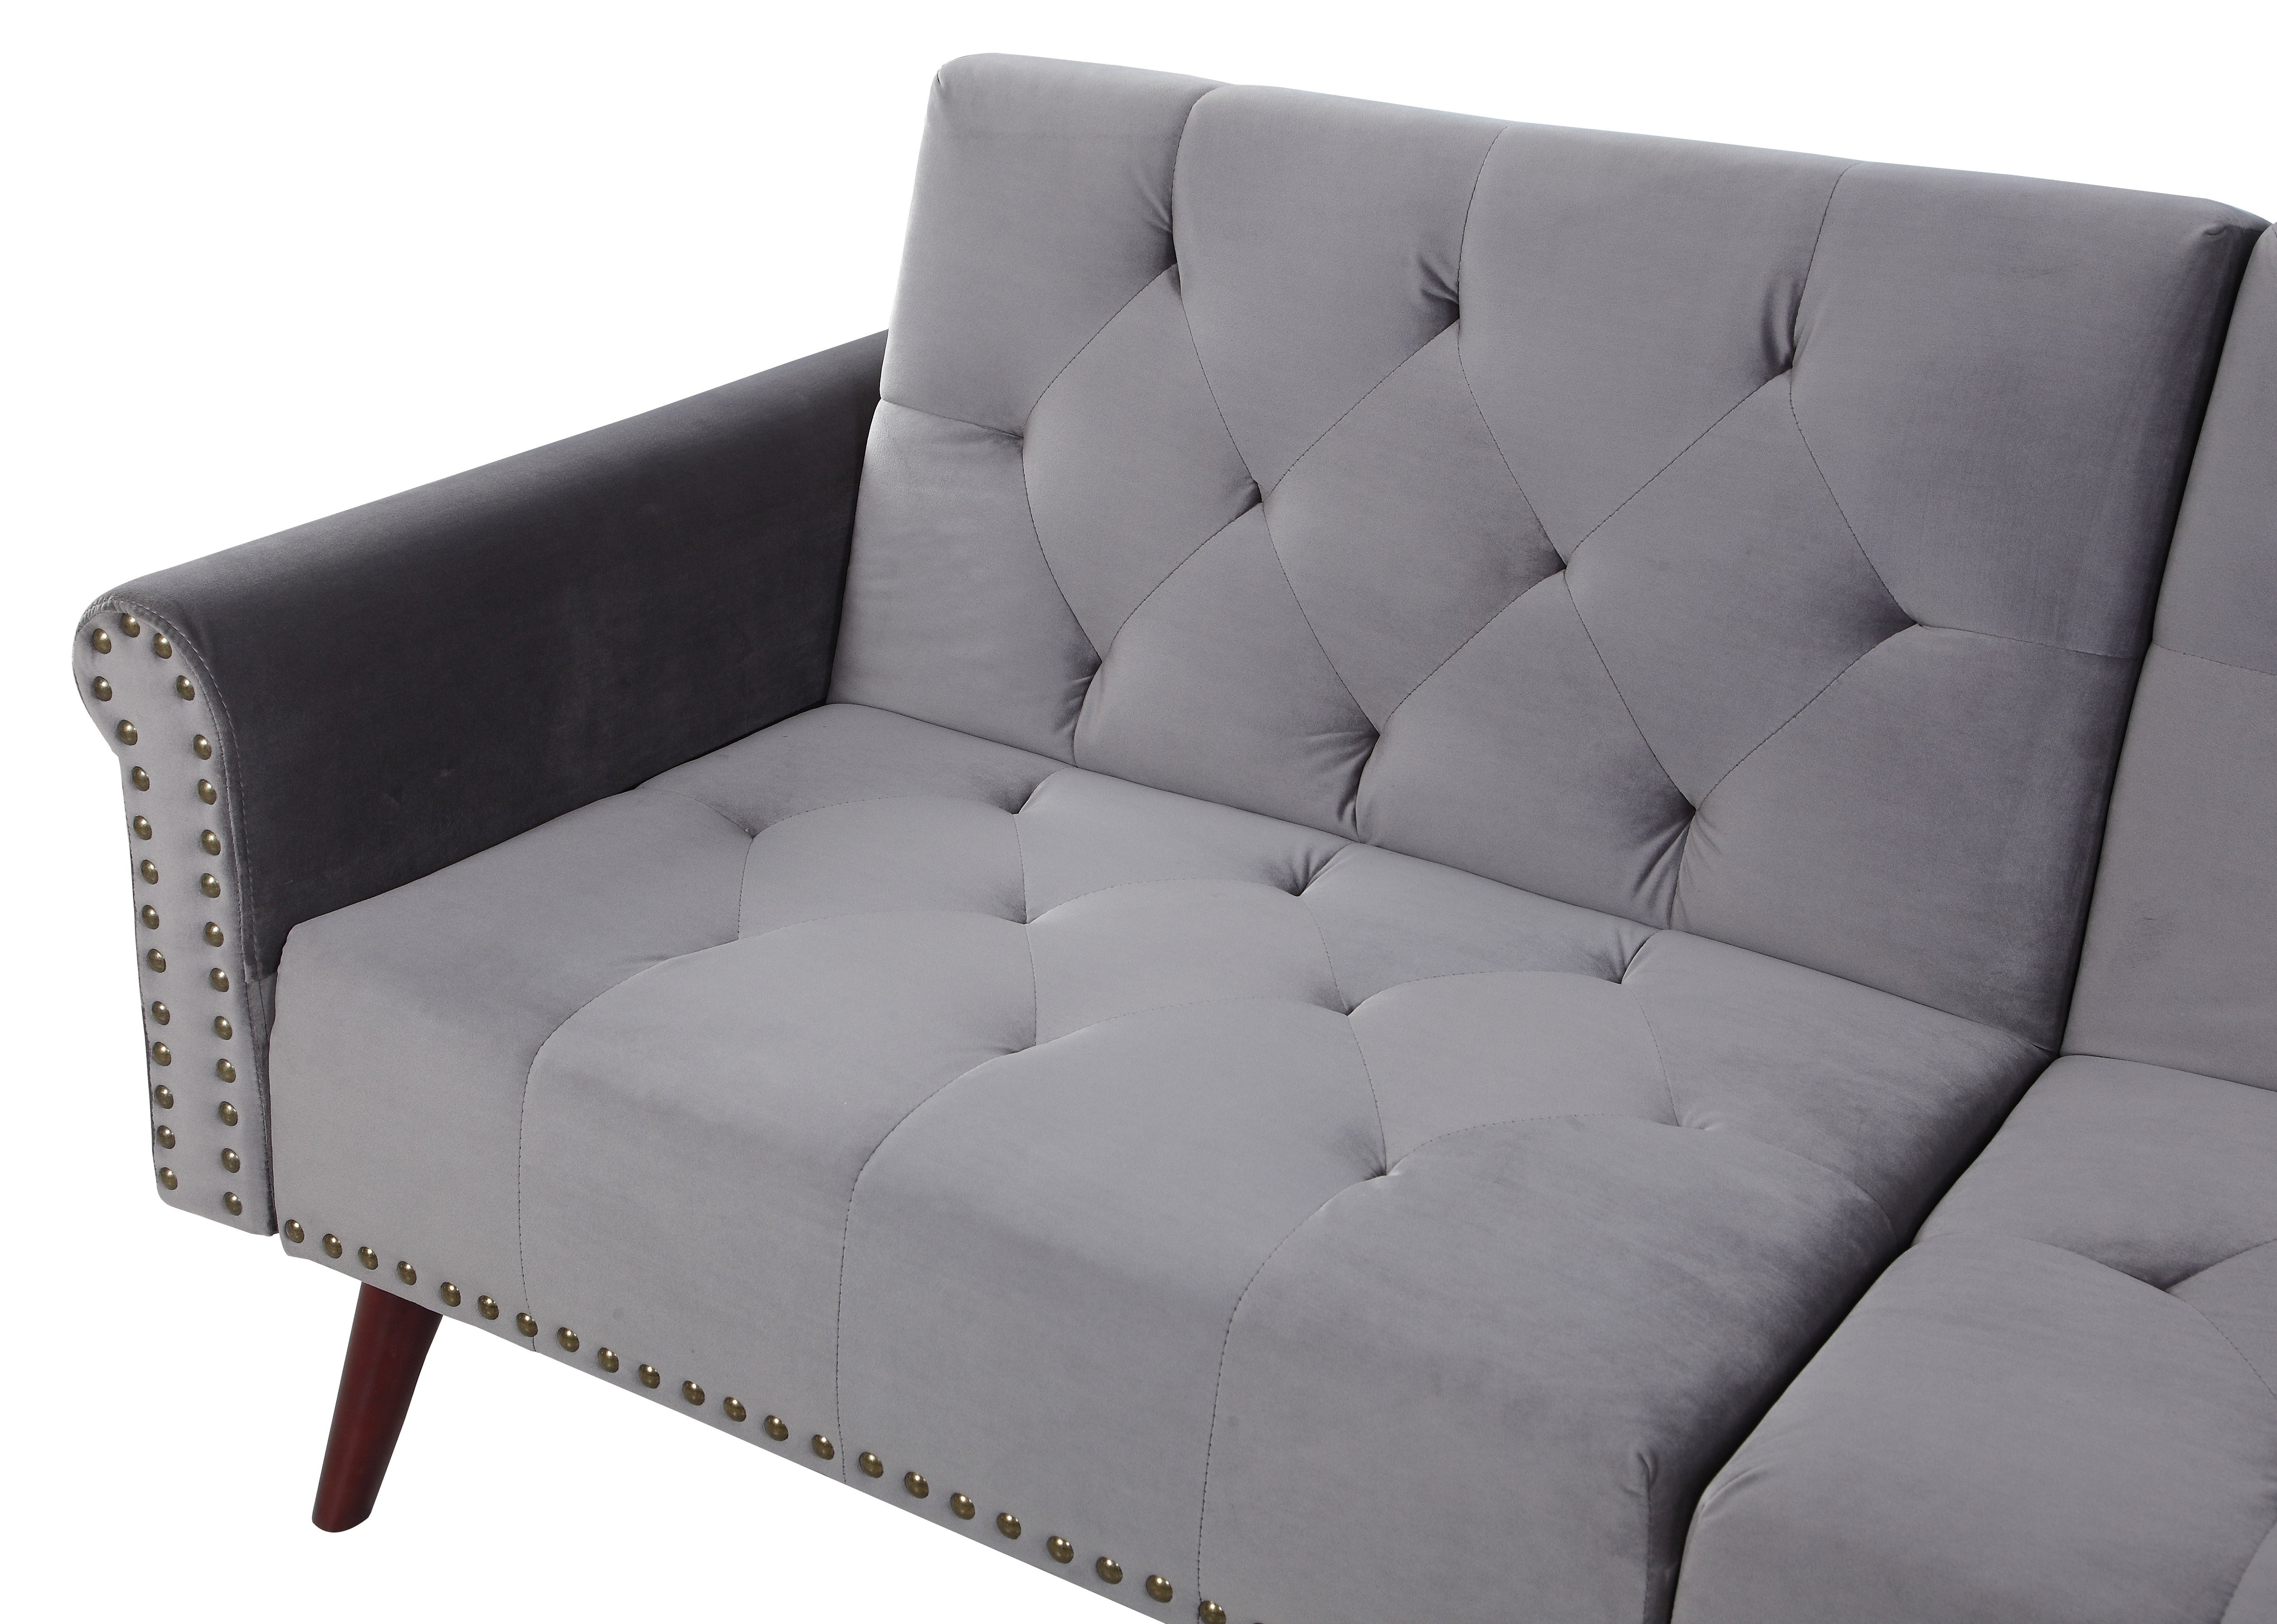 Best ideas about Velvet Sleeper Sofa
. Save or Pin Becca Classic Velvet Nailhead Trim Sleeper Sofa Now.